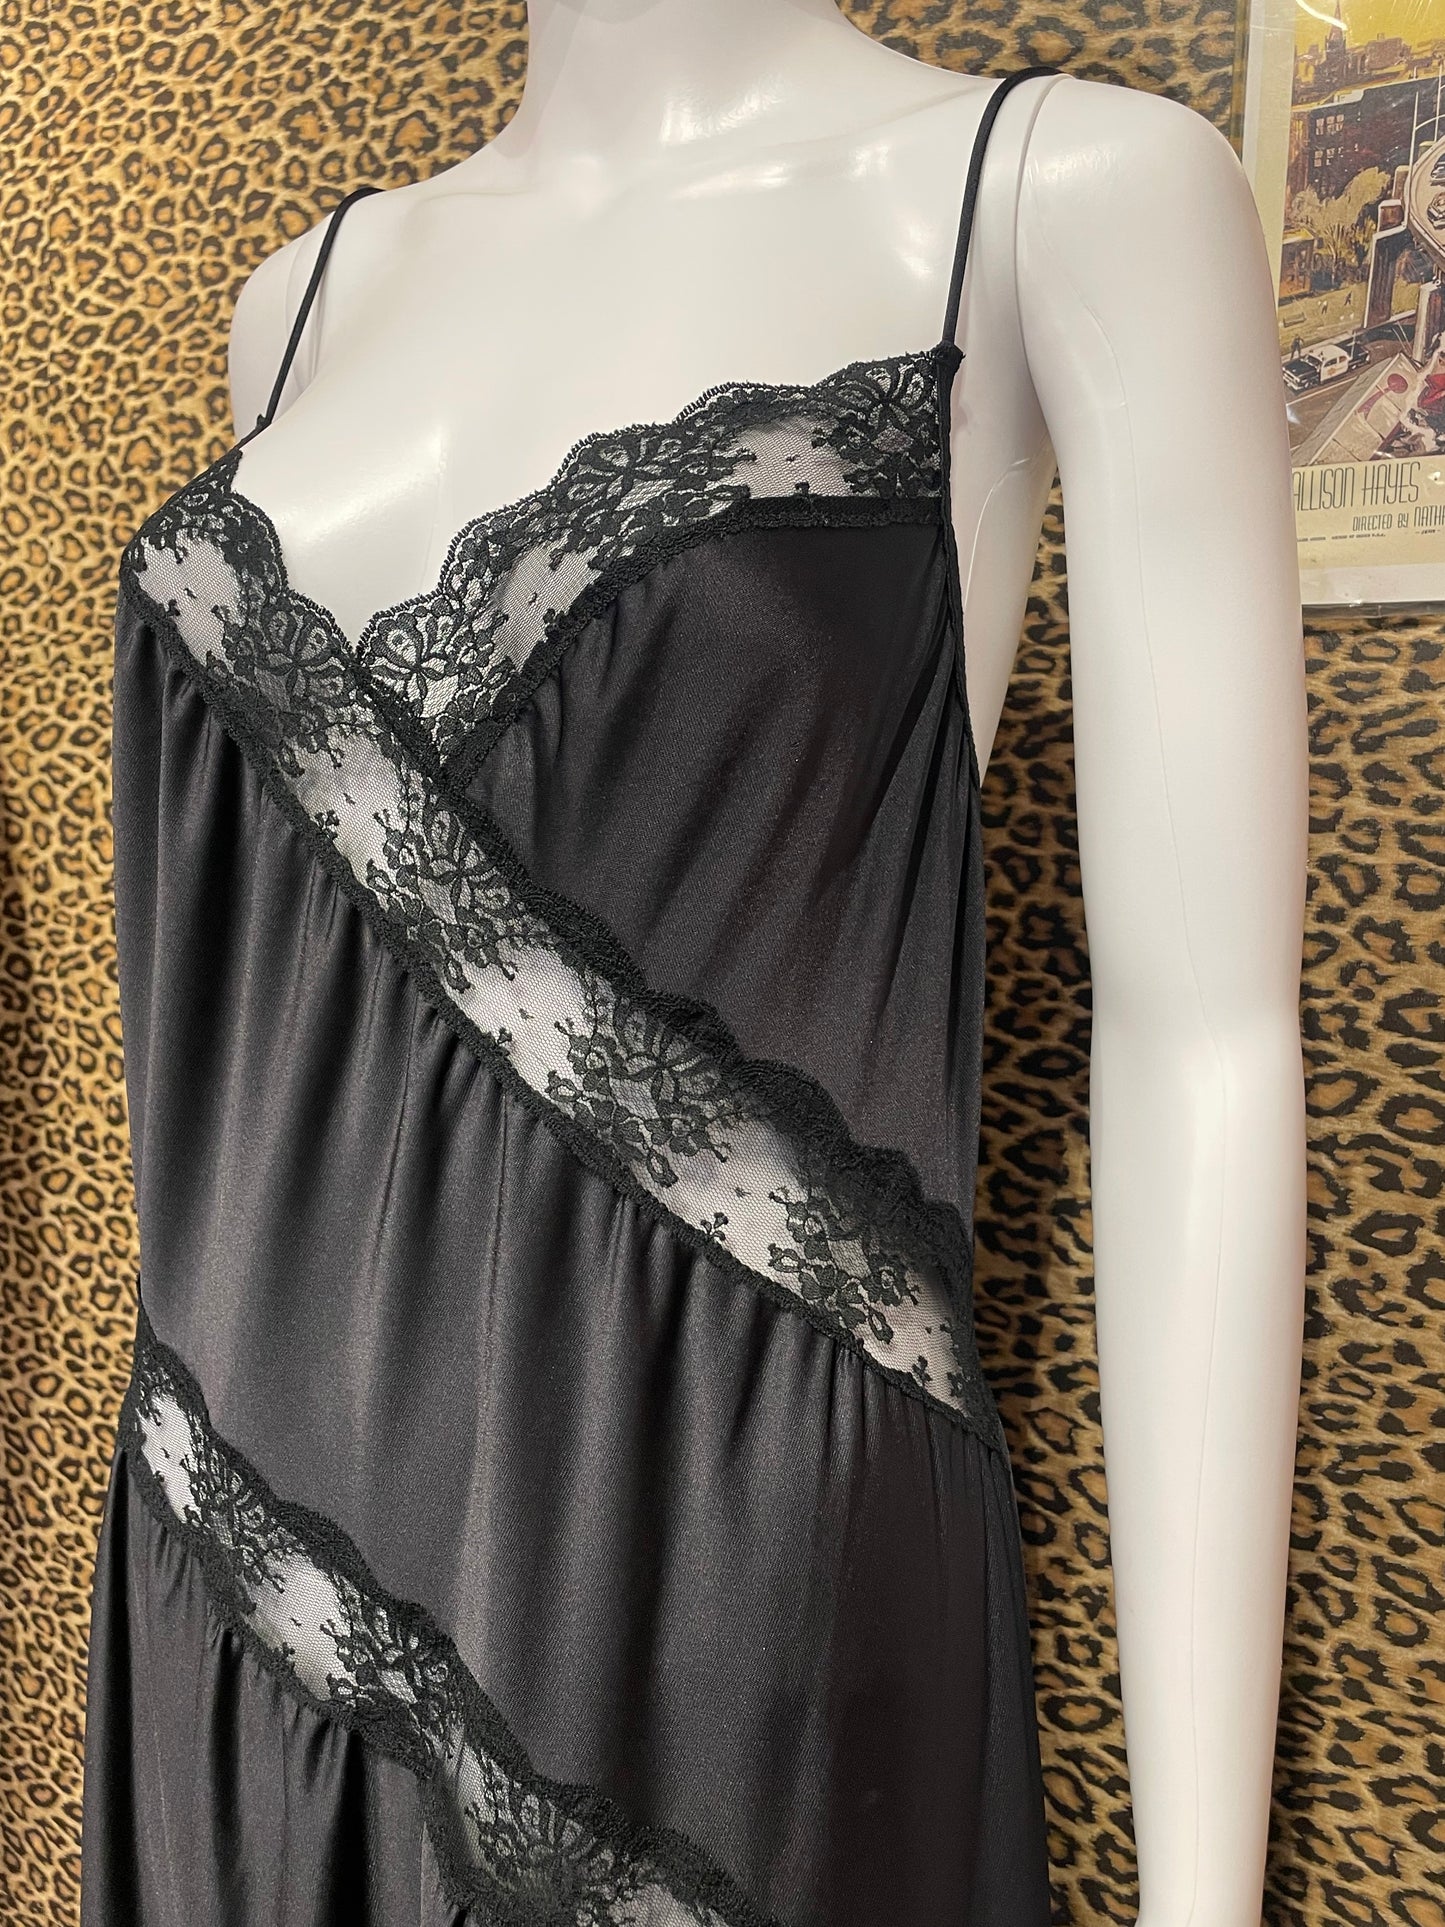 1970’s Black Lace Slip Dress